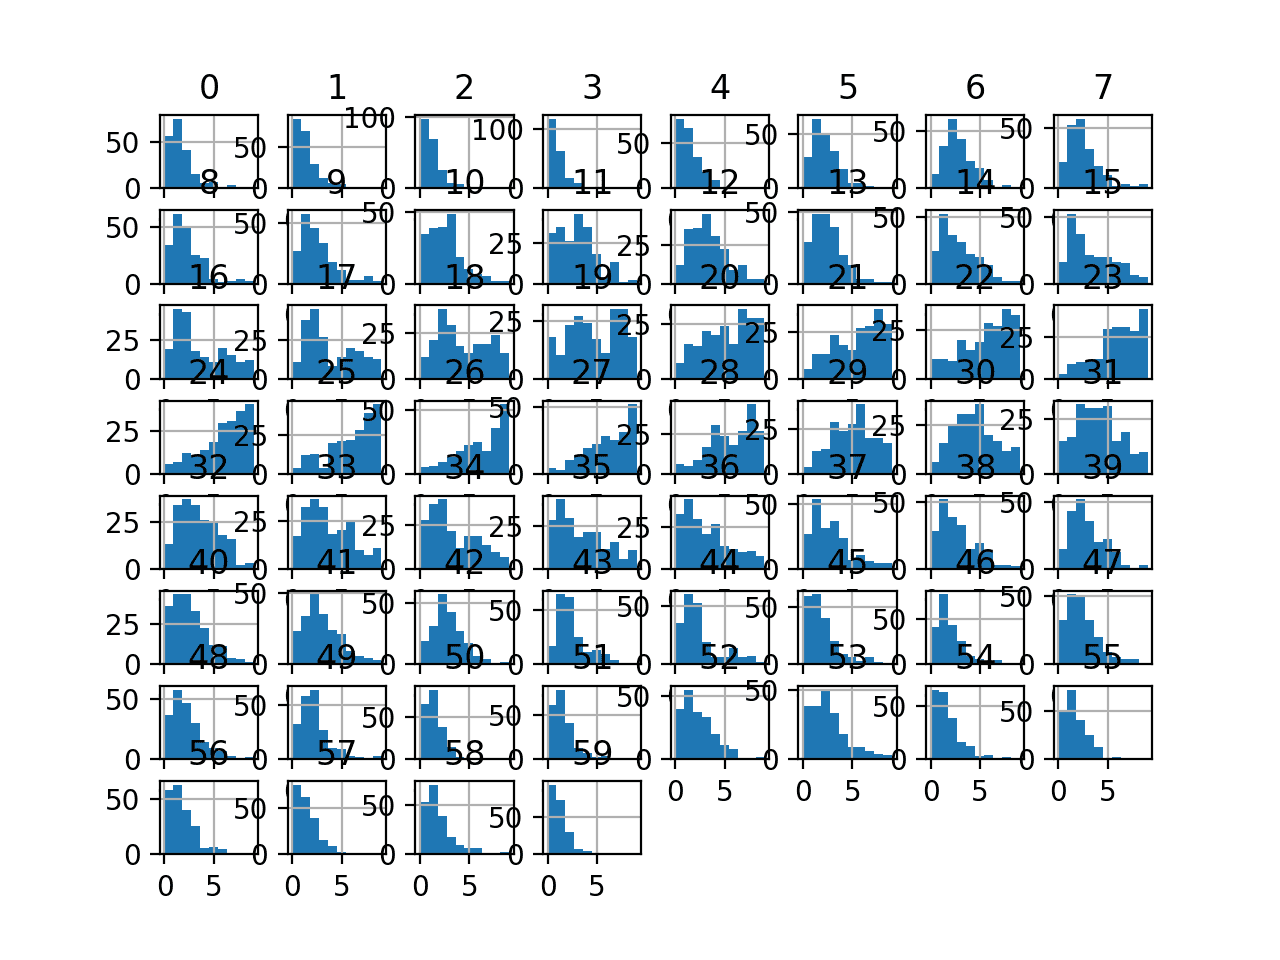 Histogram Plots of Uniform Discretization Transformed Input Variables for the Sonar Dataset